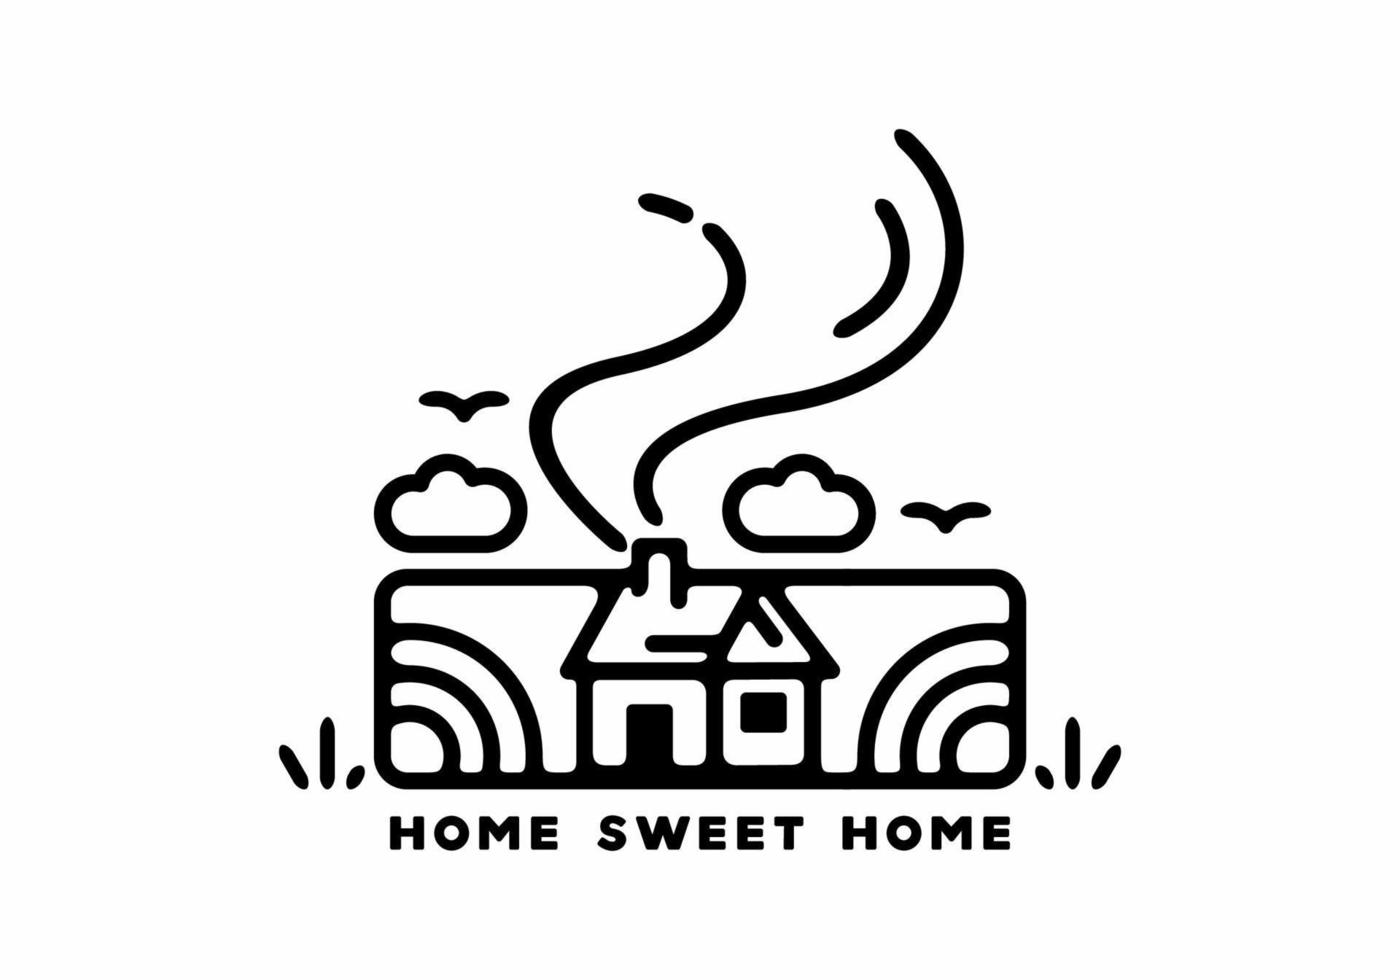 Home sweet home line art illustration vector